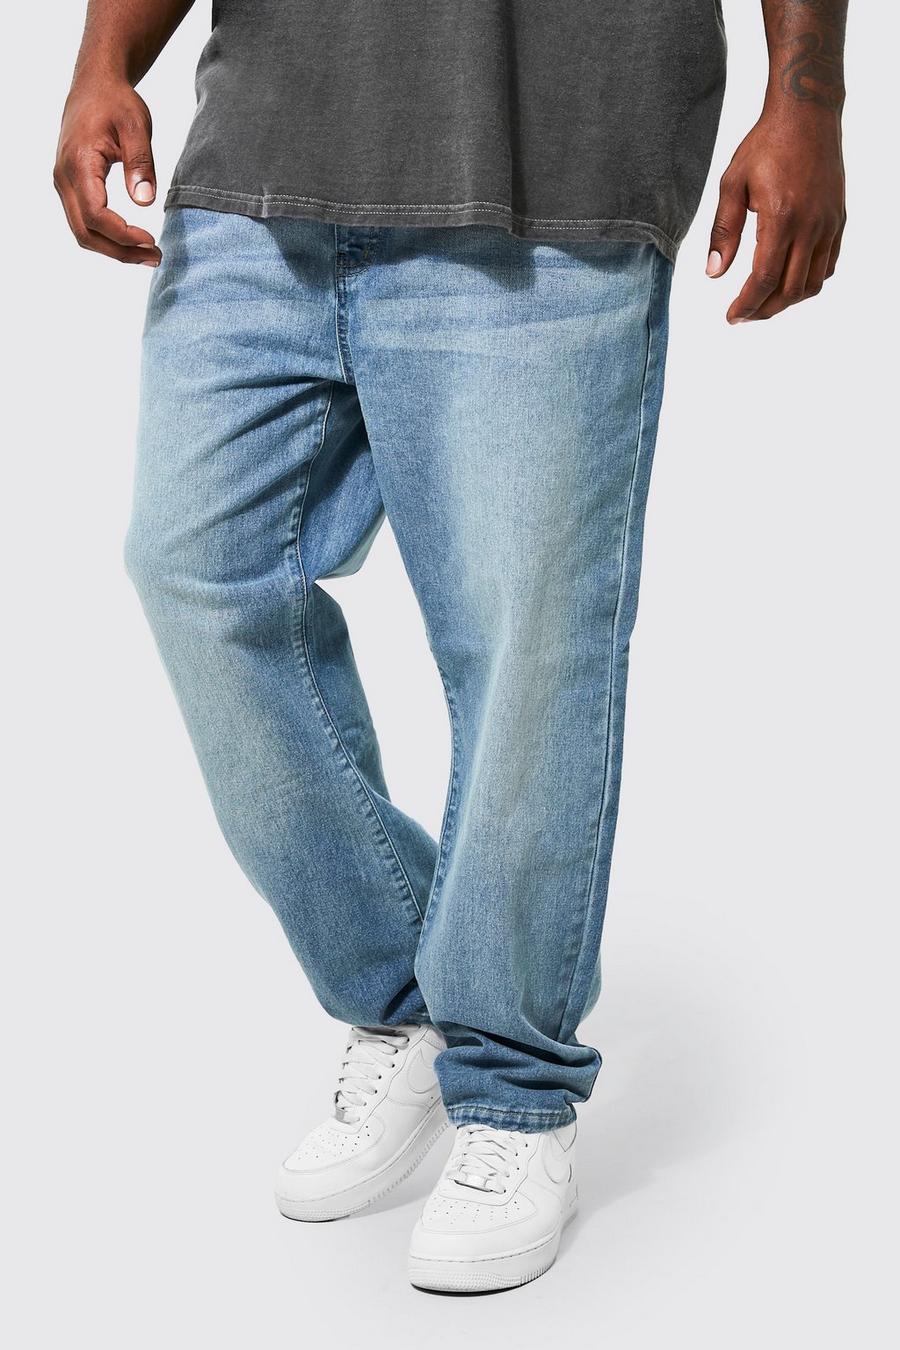 Jeans Plus Size Slim Fit in denim rigido, Mid blue